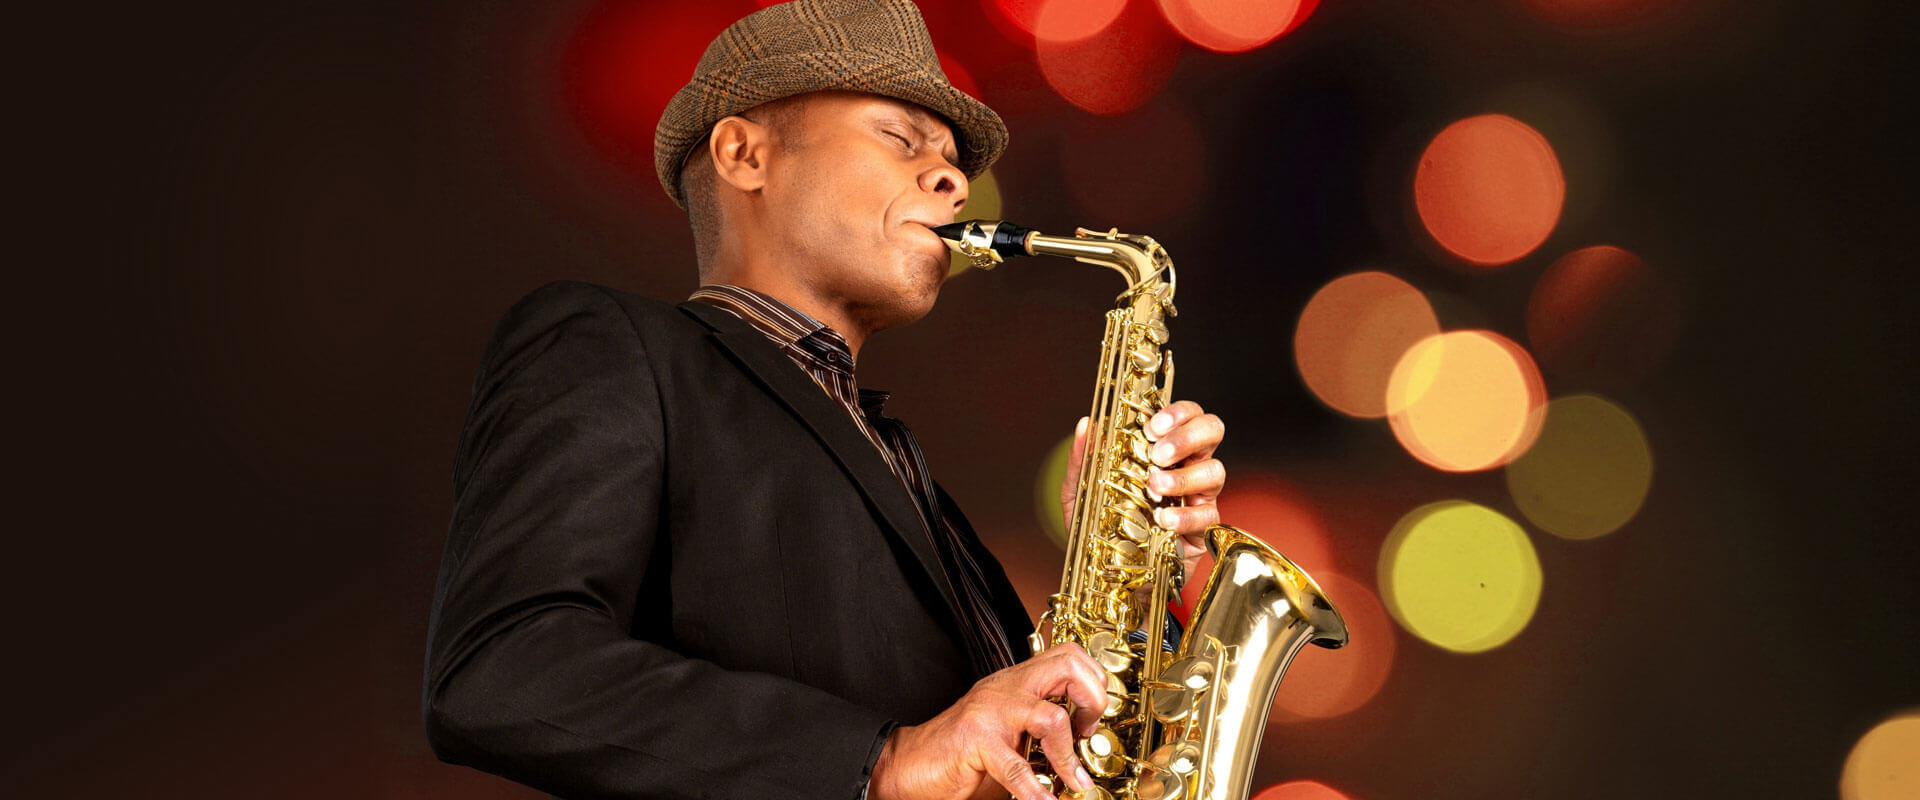 Saxophone Lessons Community, VA